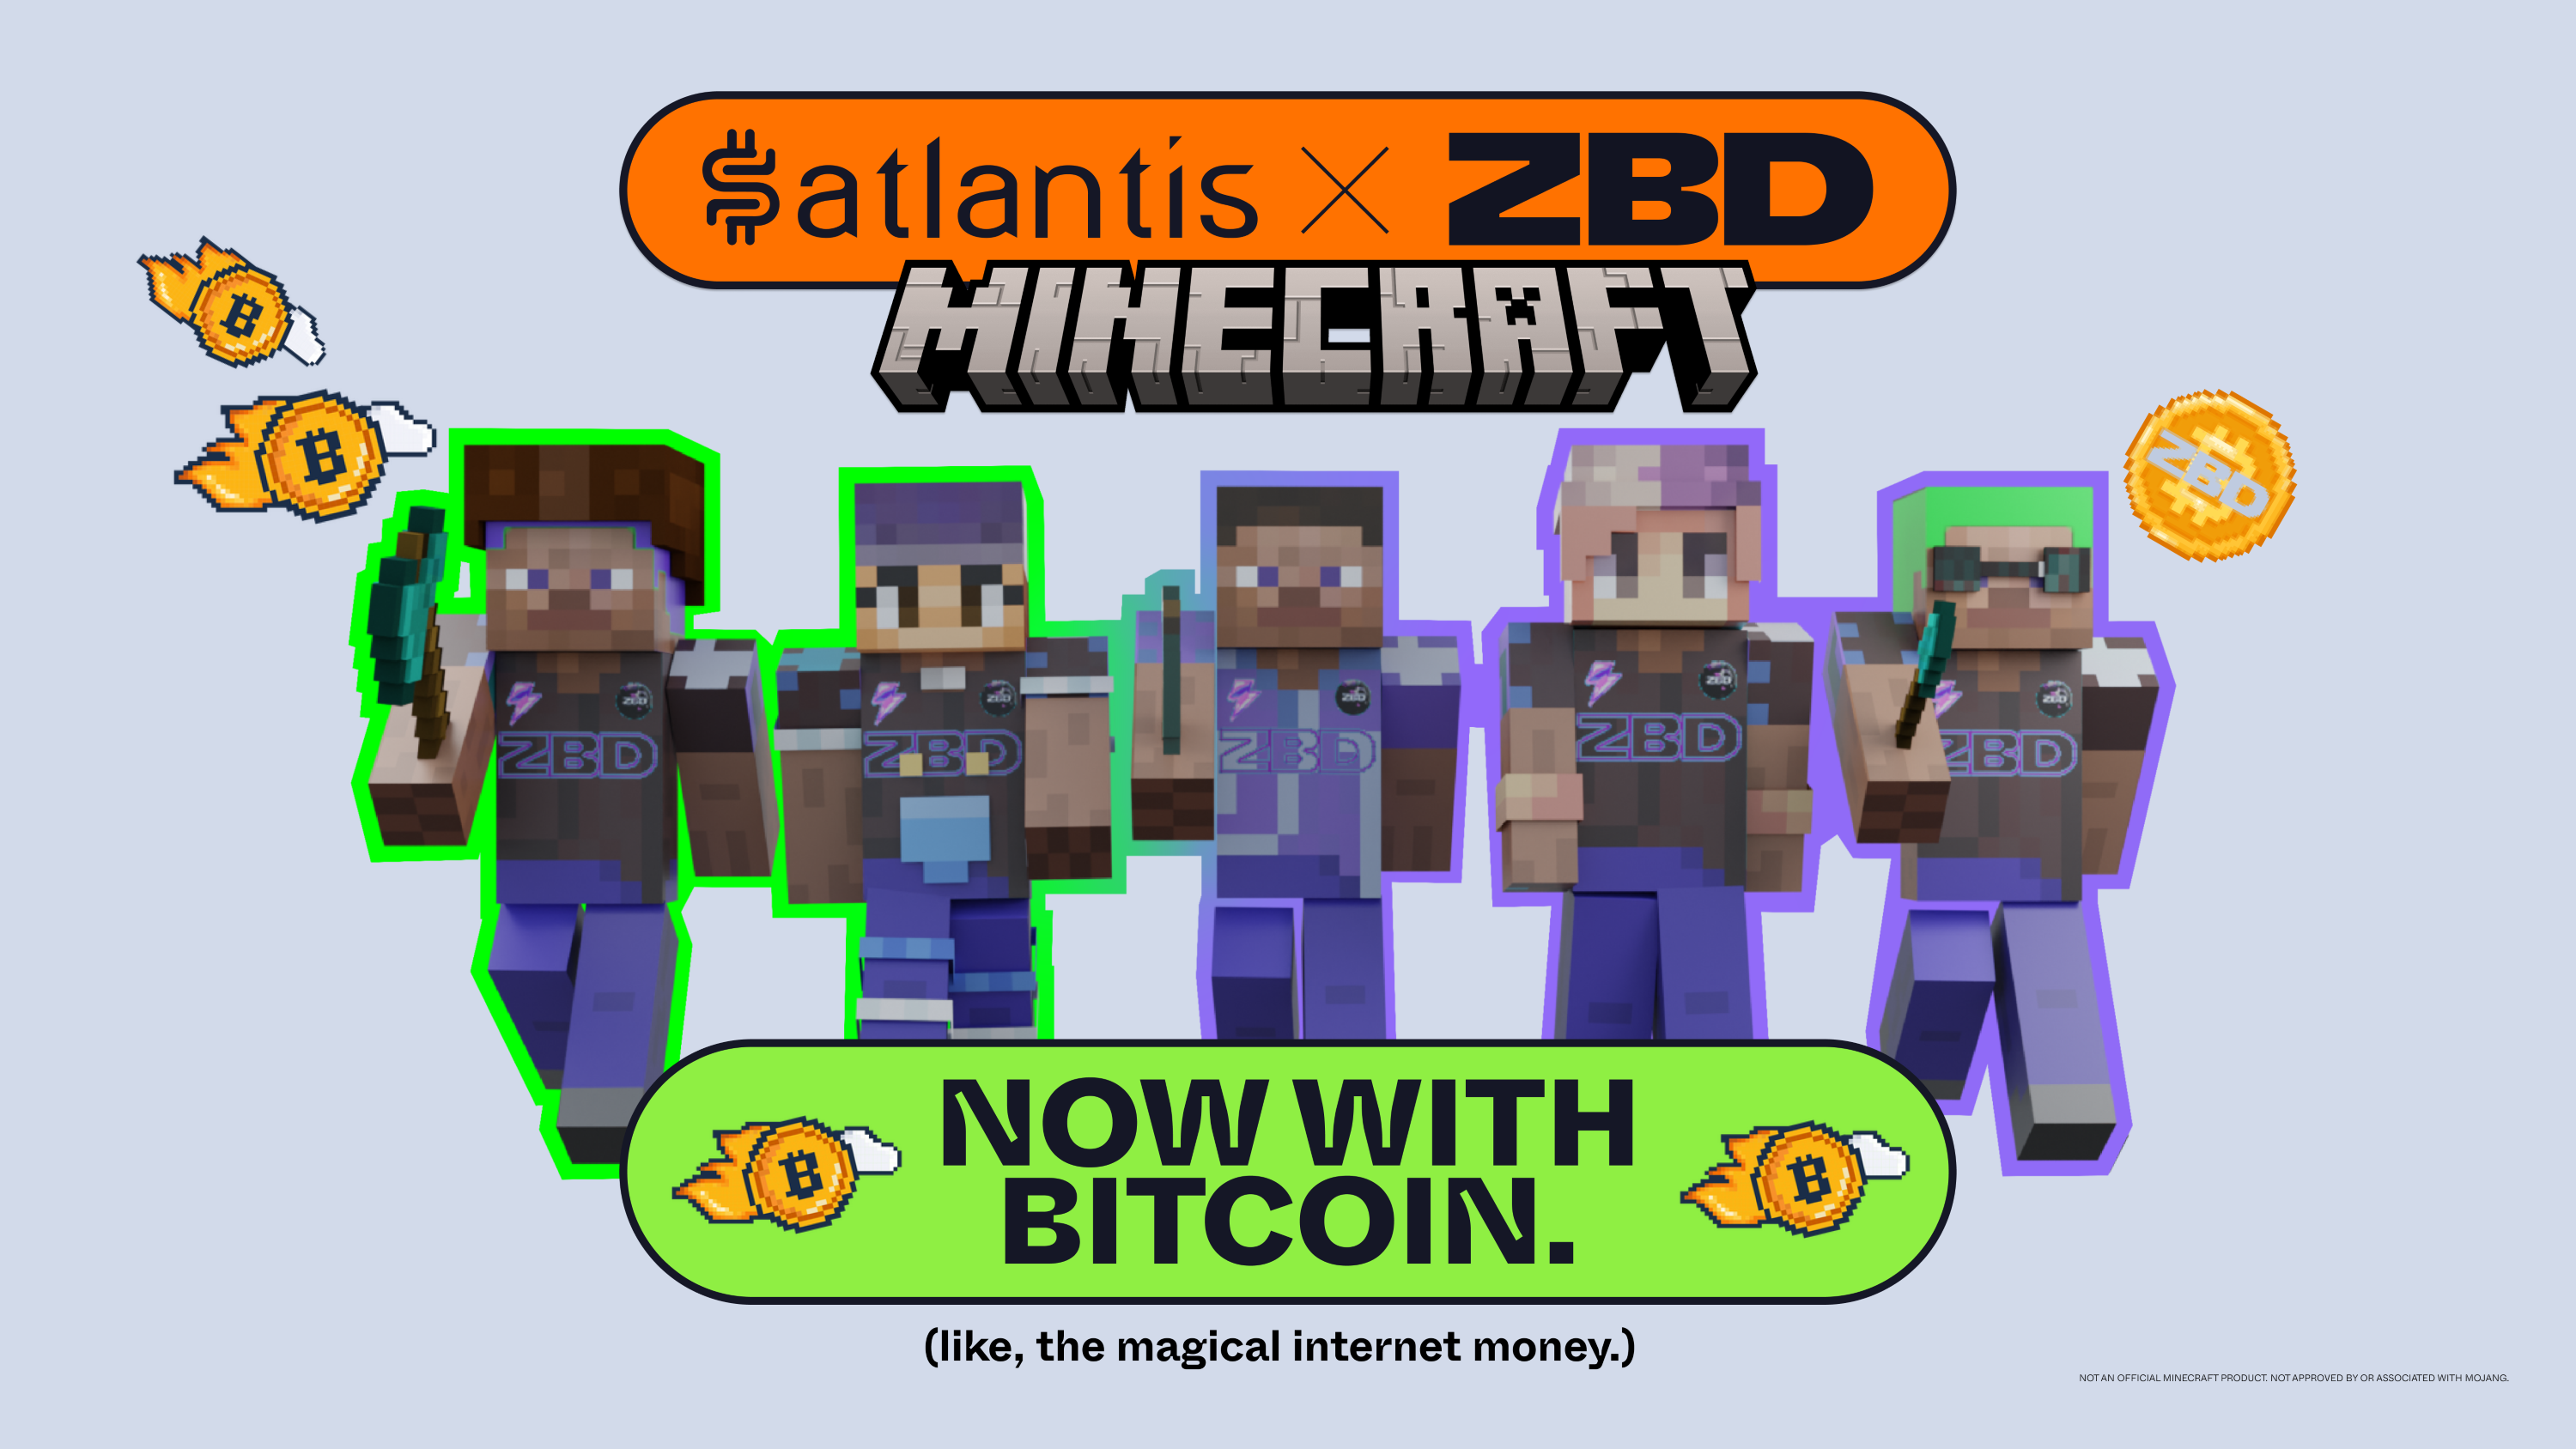 Gamers can now earn Bitcoin rewards on Minecraft via Zebedee